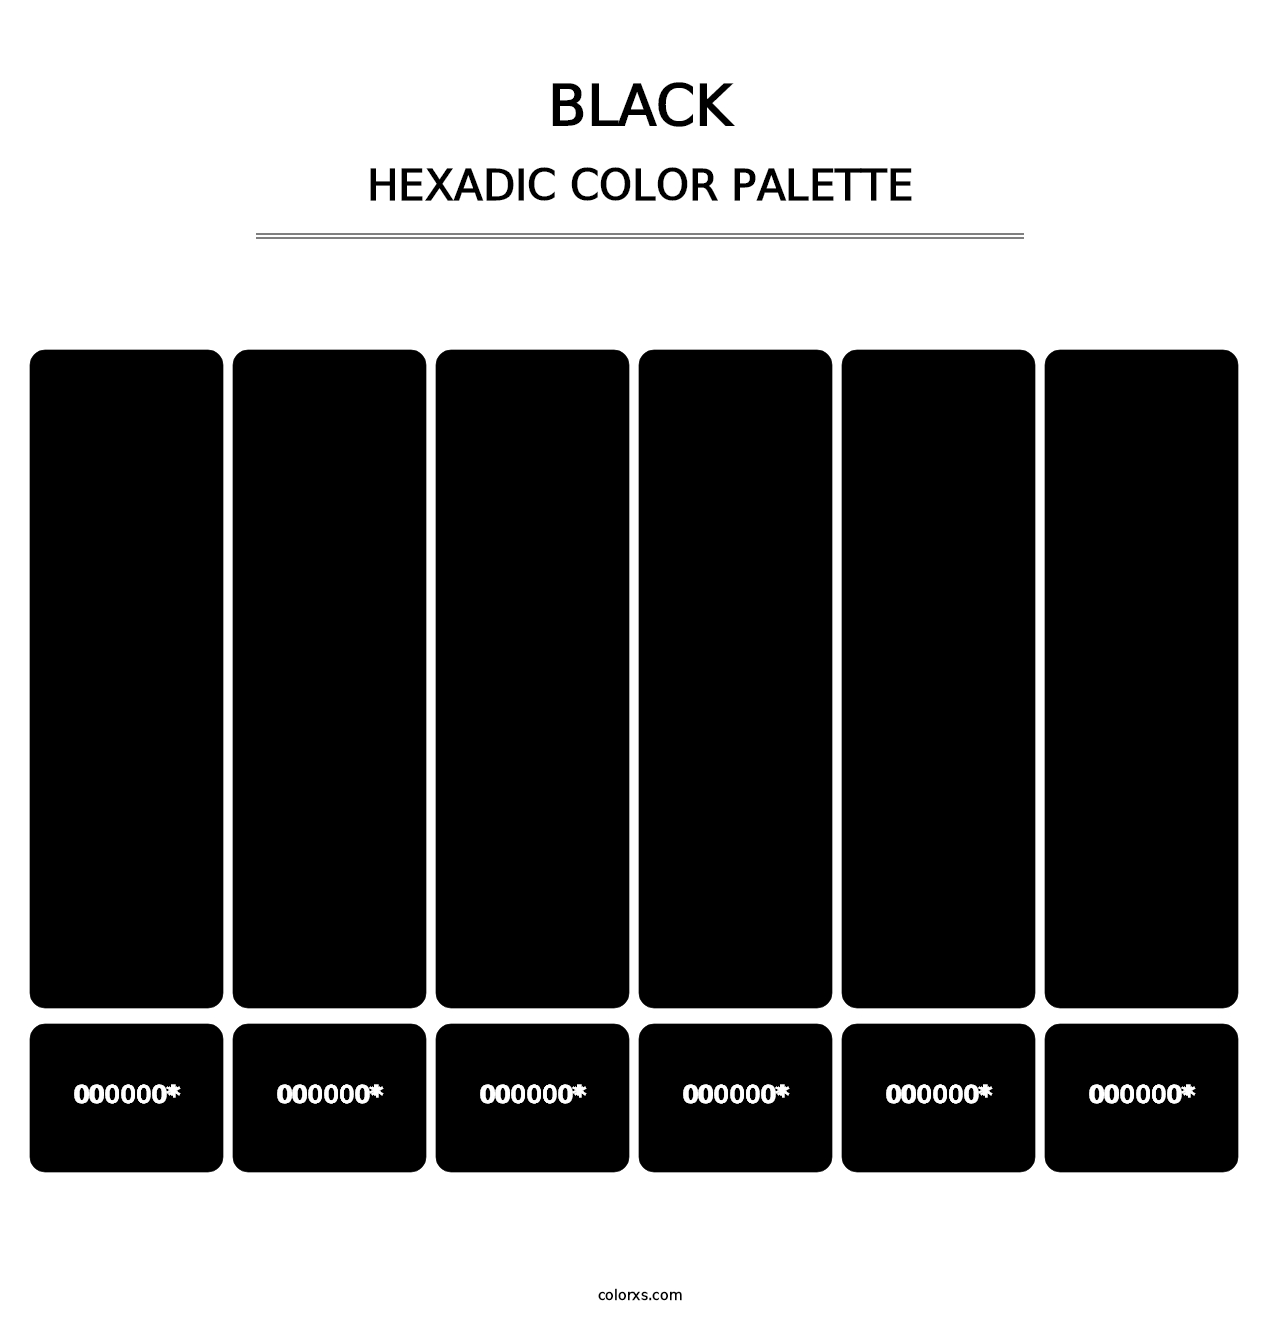 Black - Hexadic Color Palette